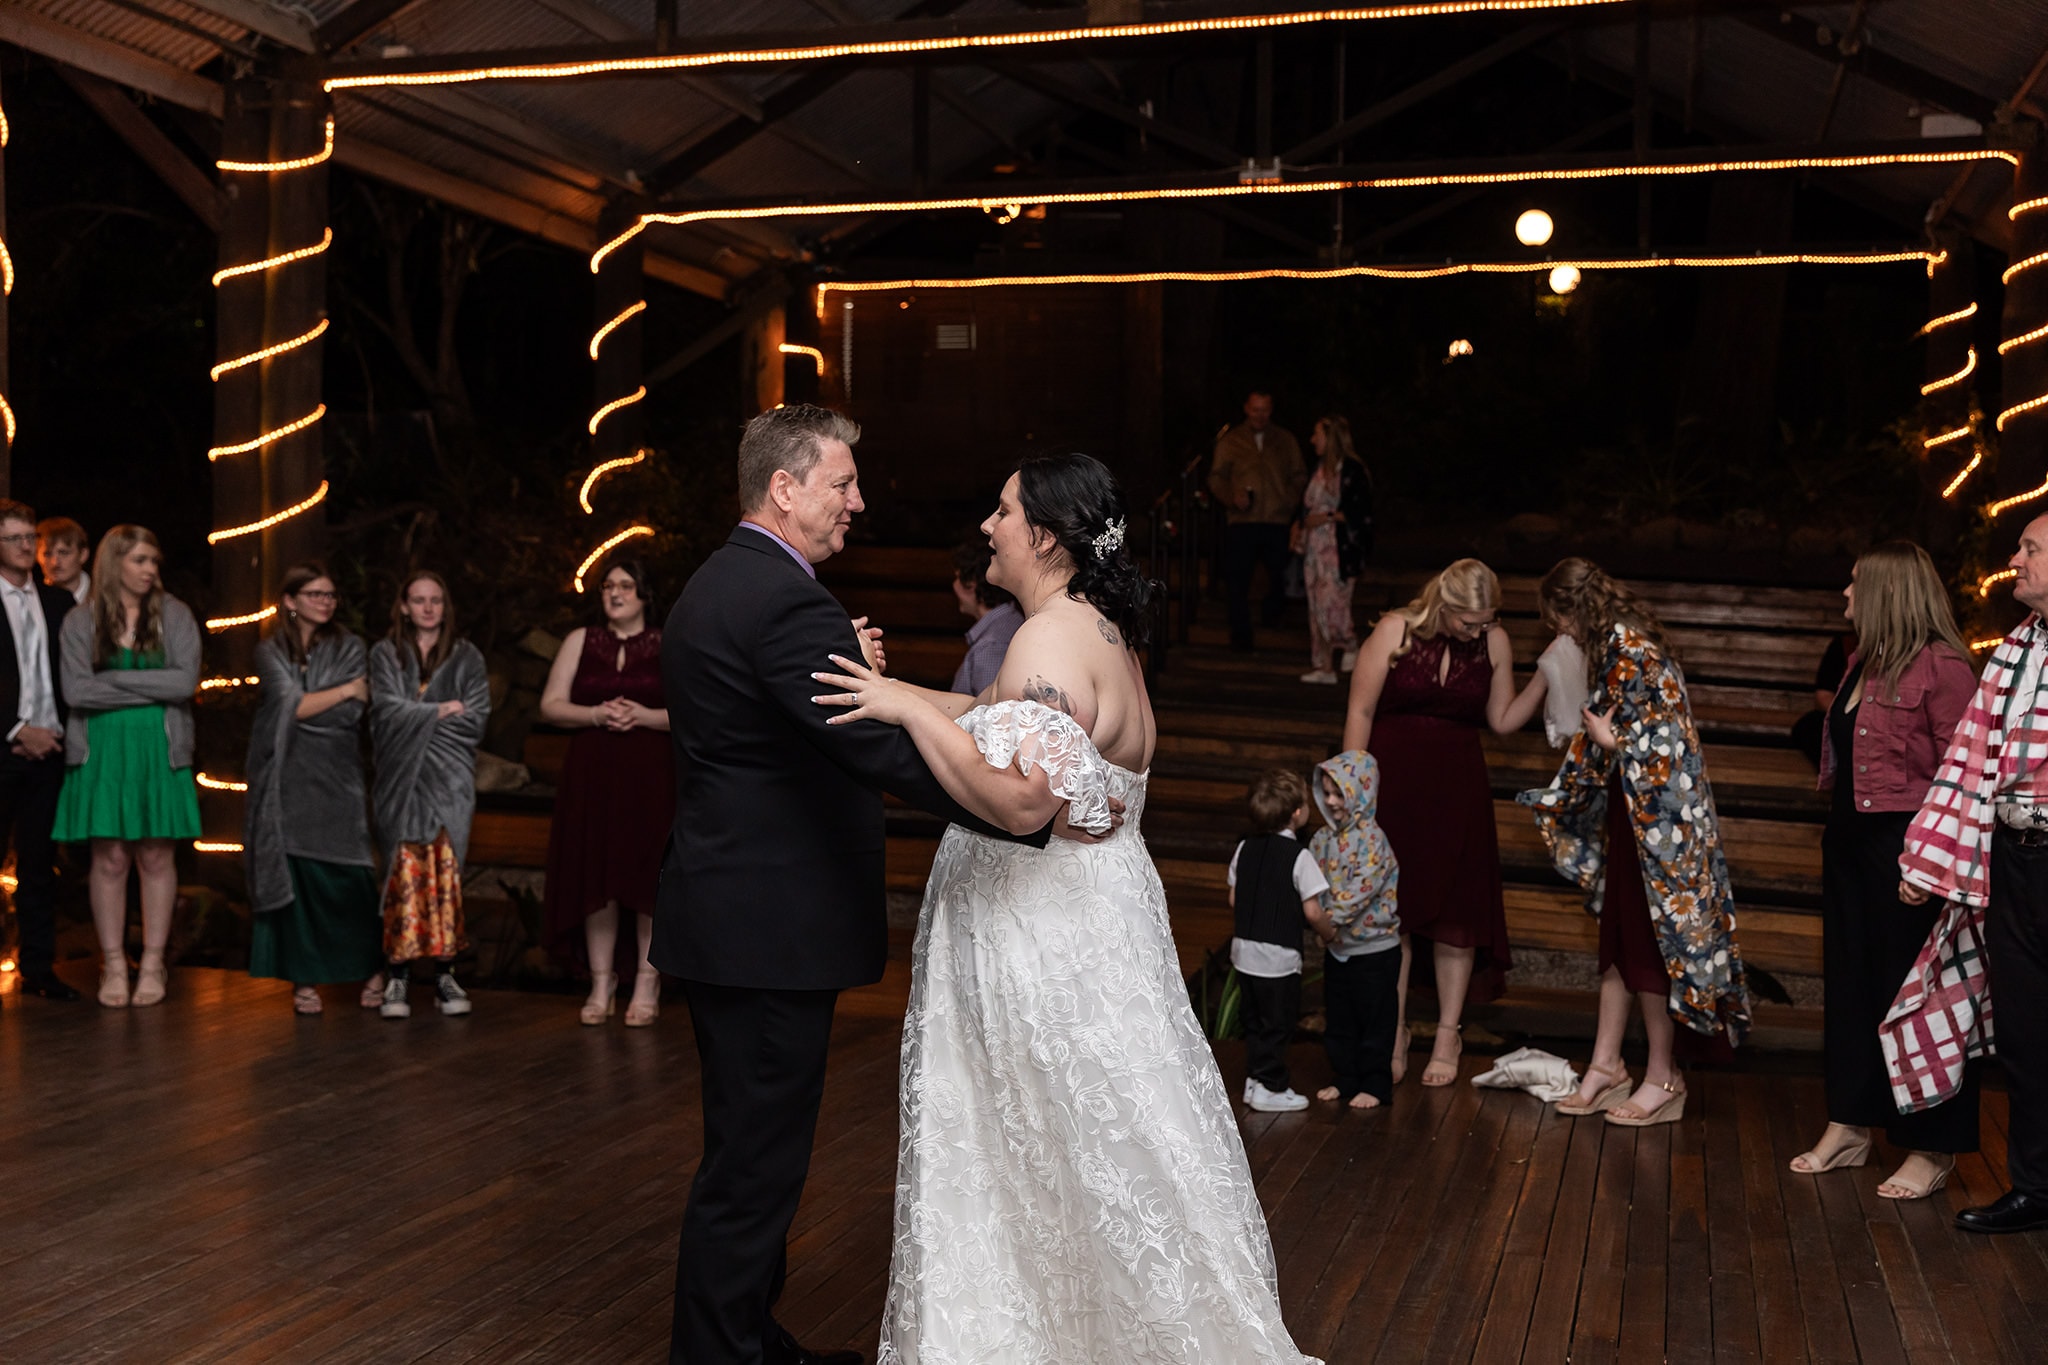 Wedding ceremony at Cedar Creek Lodges, Tamborine Mountain by Mooi photography.